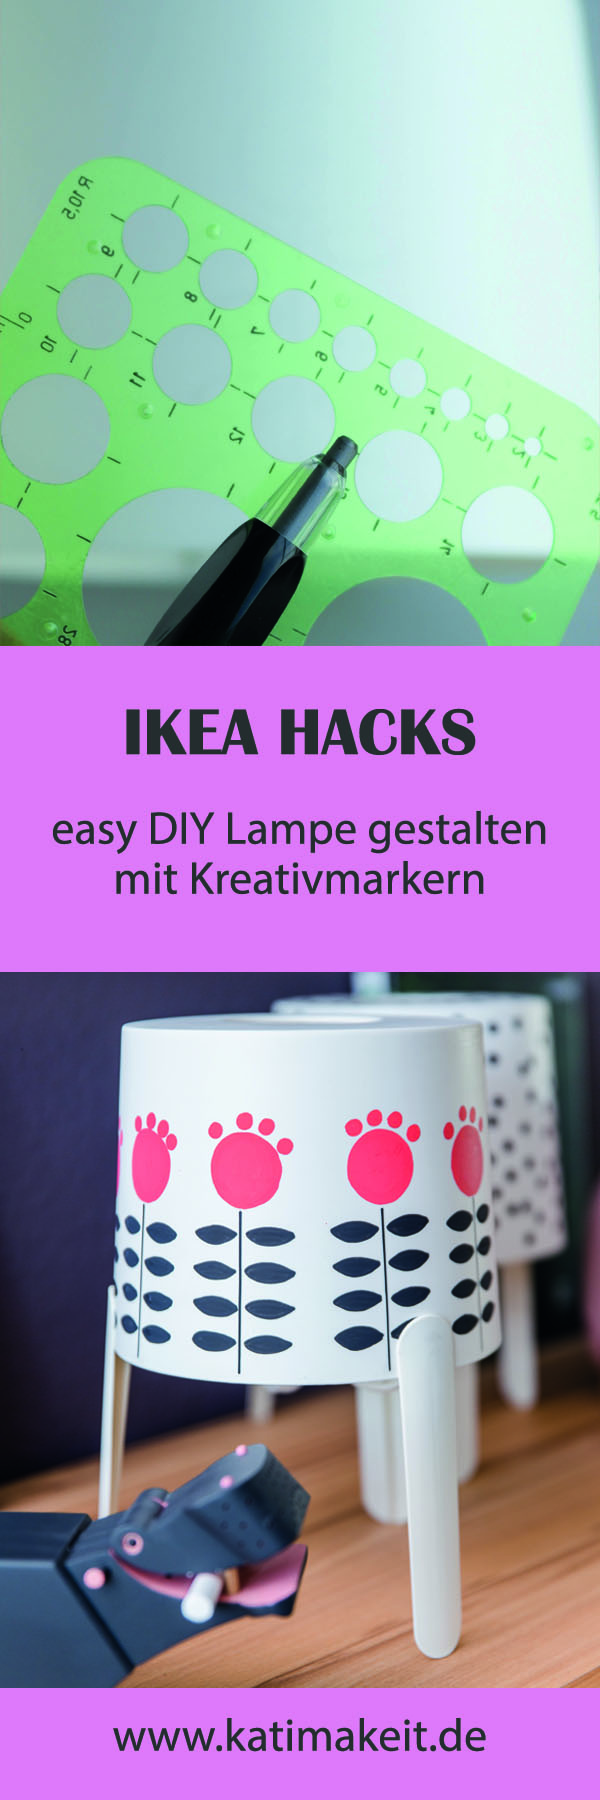 Licht an! | DIY Lampe | IKEA Workshop | Kati make it